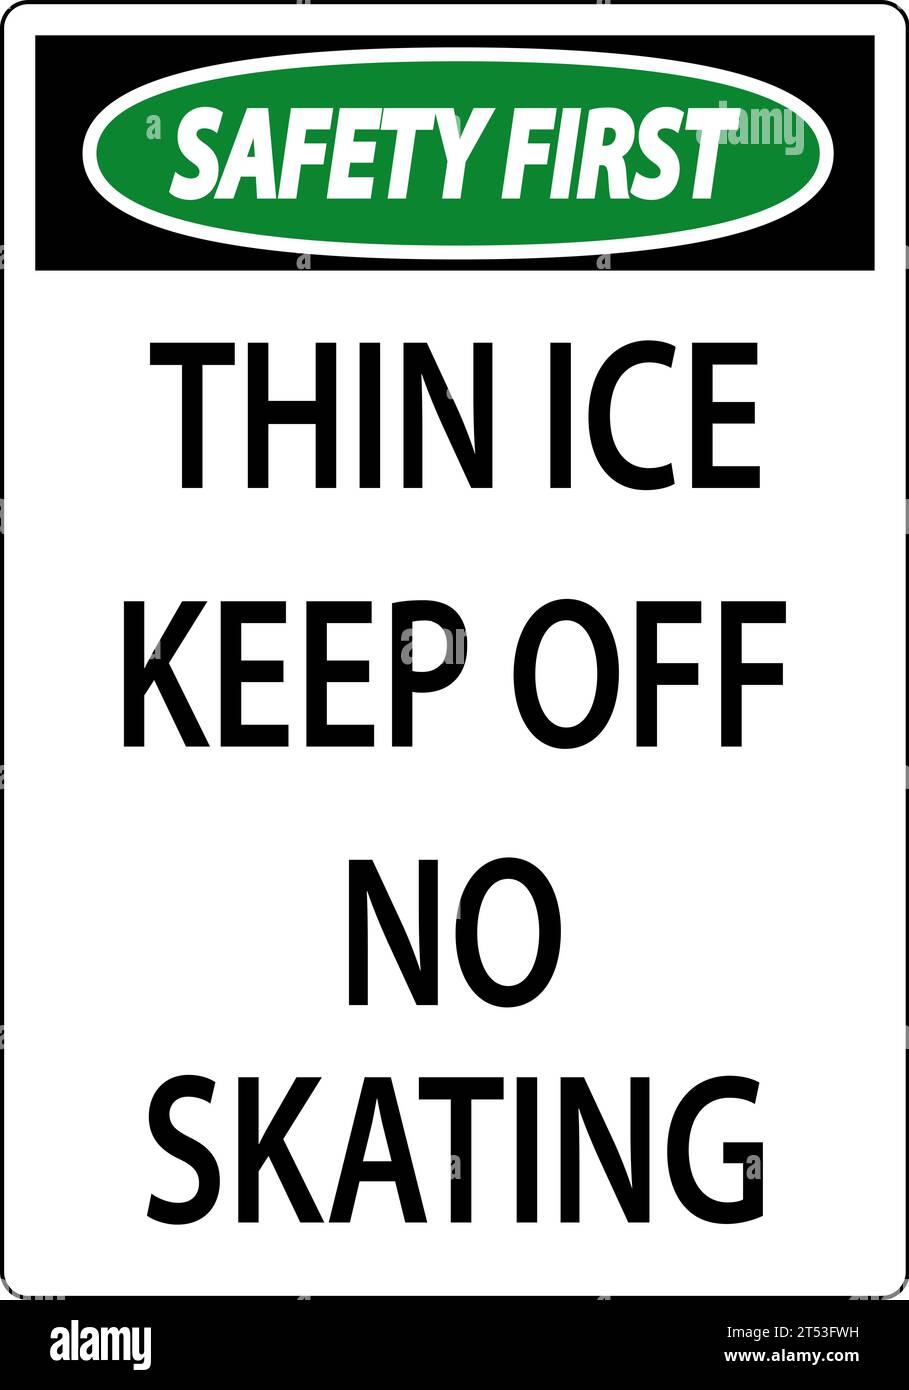 Ice Skating Safety Tips